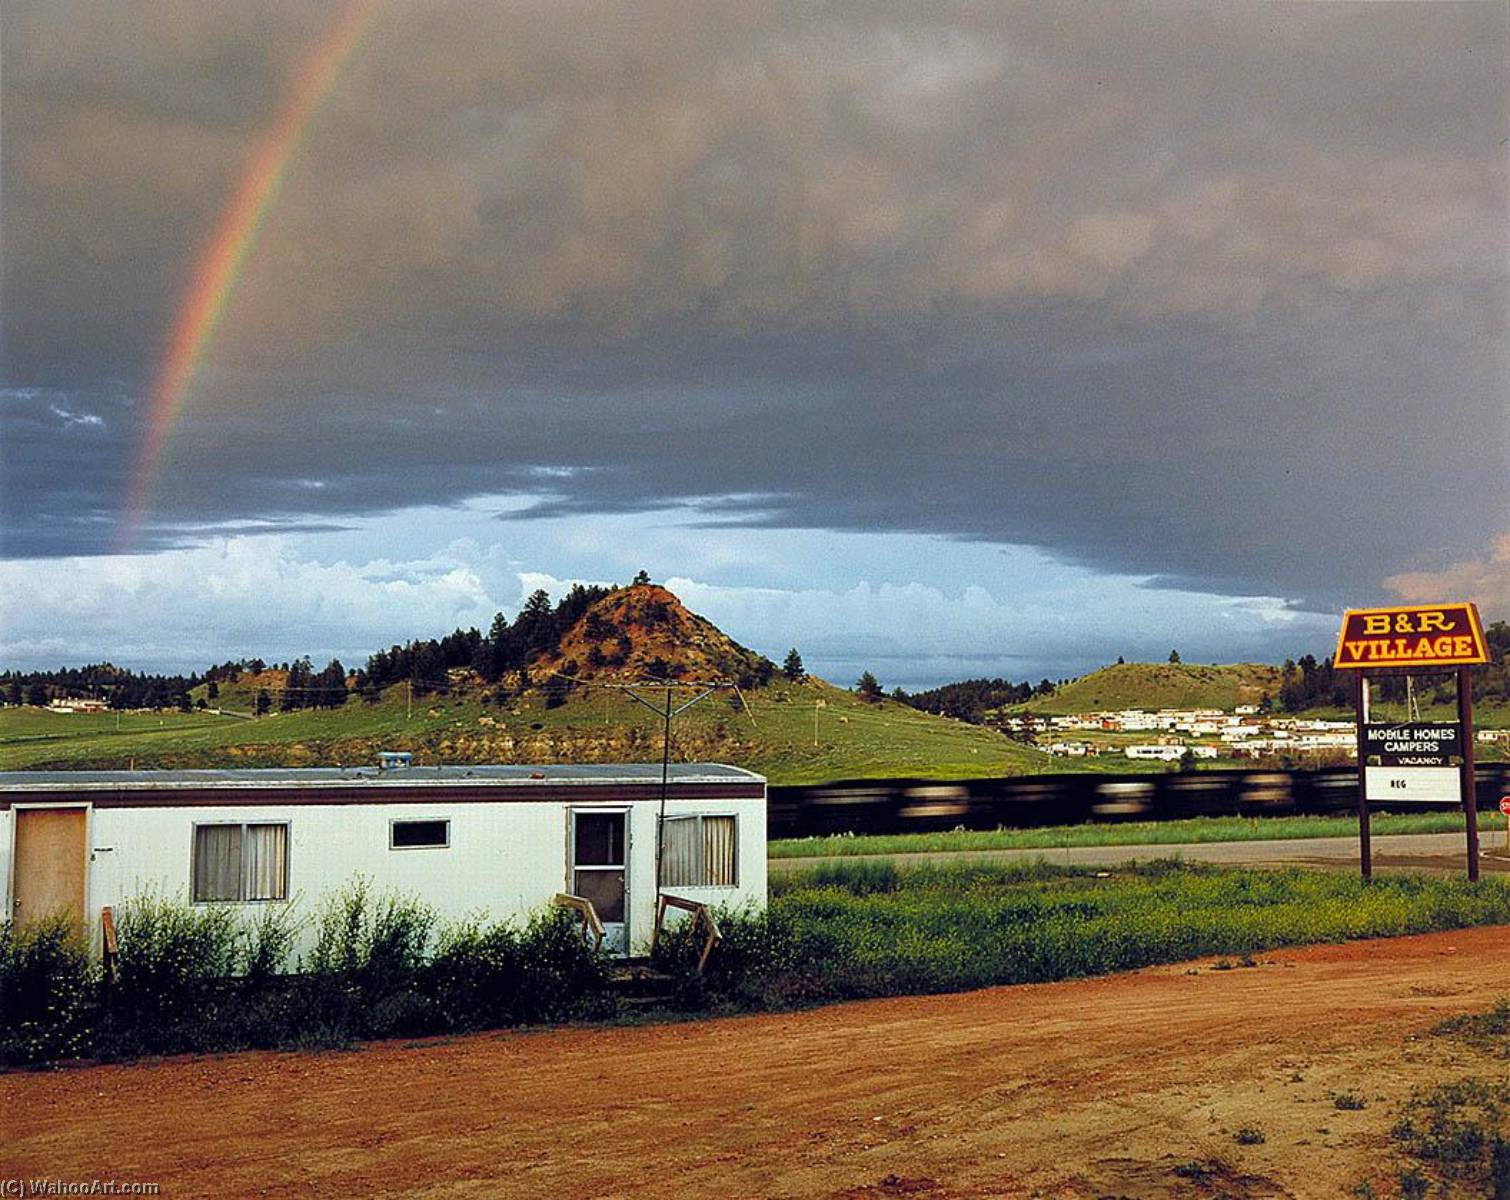 WikiOO.org - Enciclopedia of Fine Arts - Pictura, lucrări de artă David T Hanson - B and R Village Mobile Home Park and Burlington Northern Coal Train. June 1984, from the series Colstrip, Montana 1982 1985